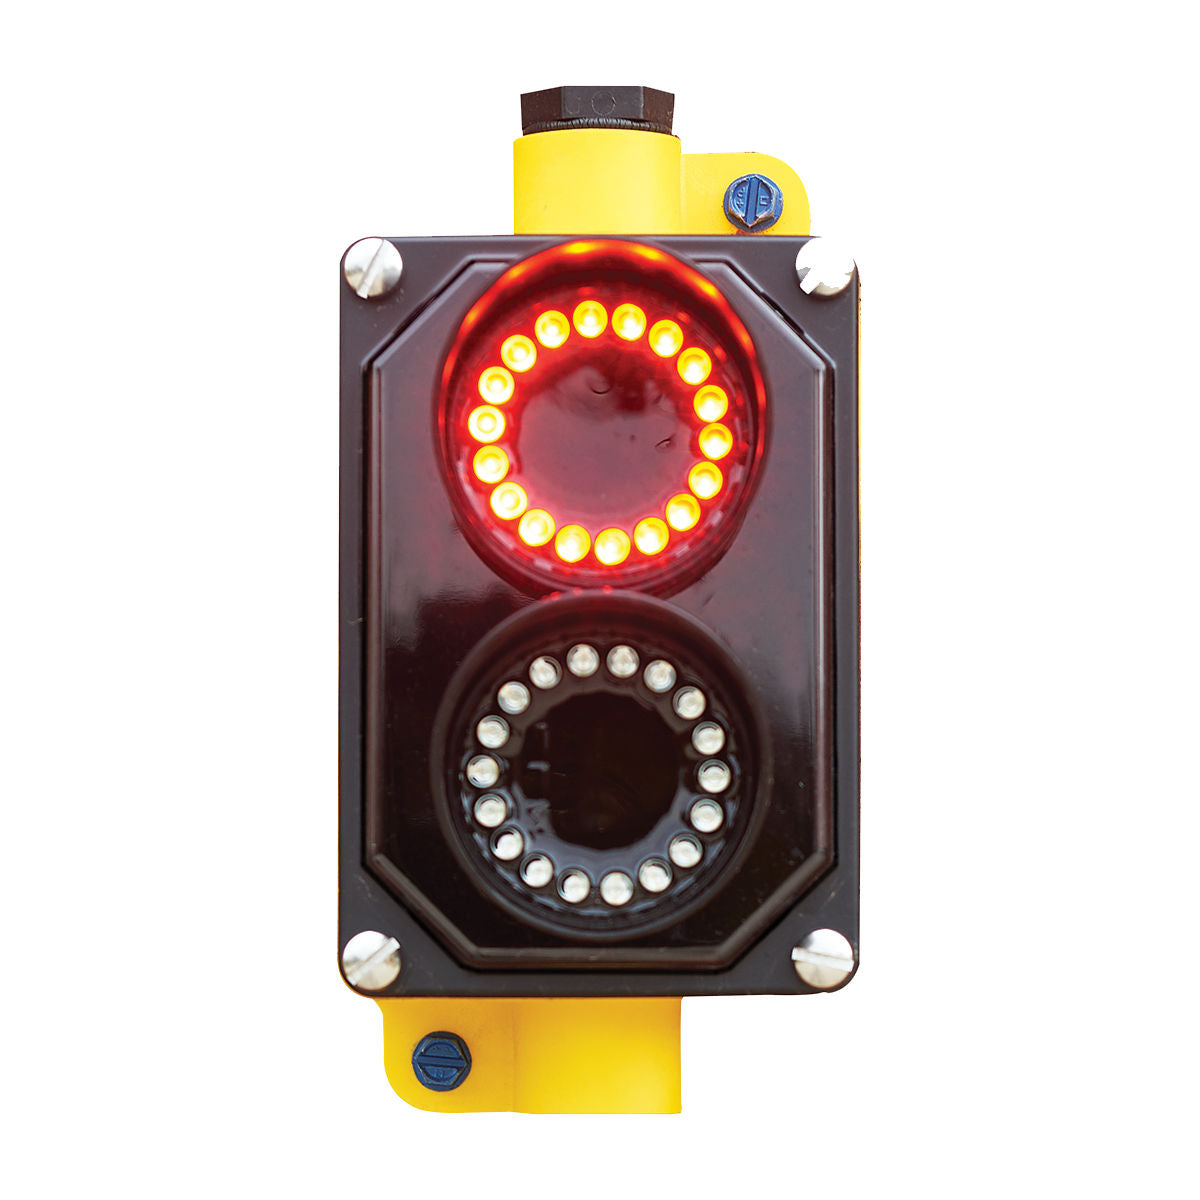 Liftmaster RGL-CTL Compact Red Green Traffic Light